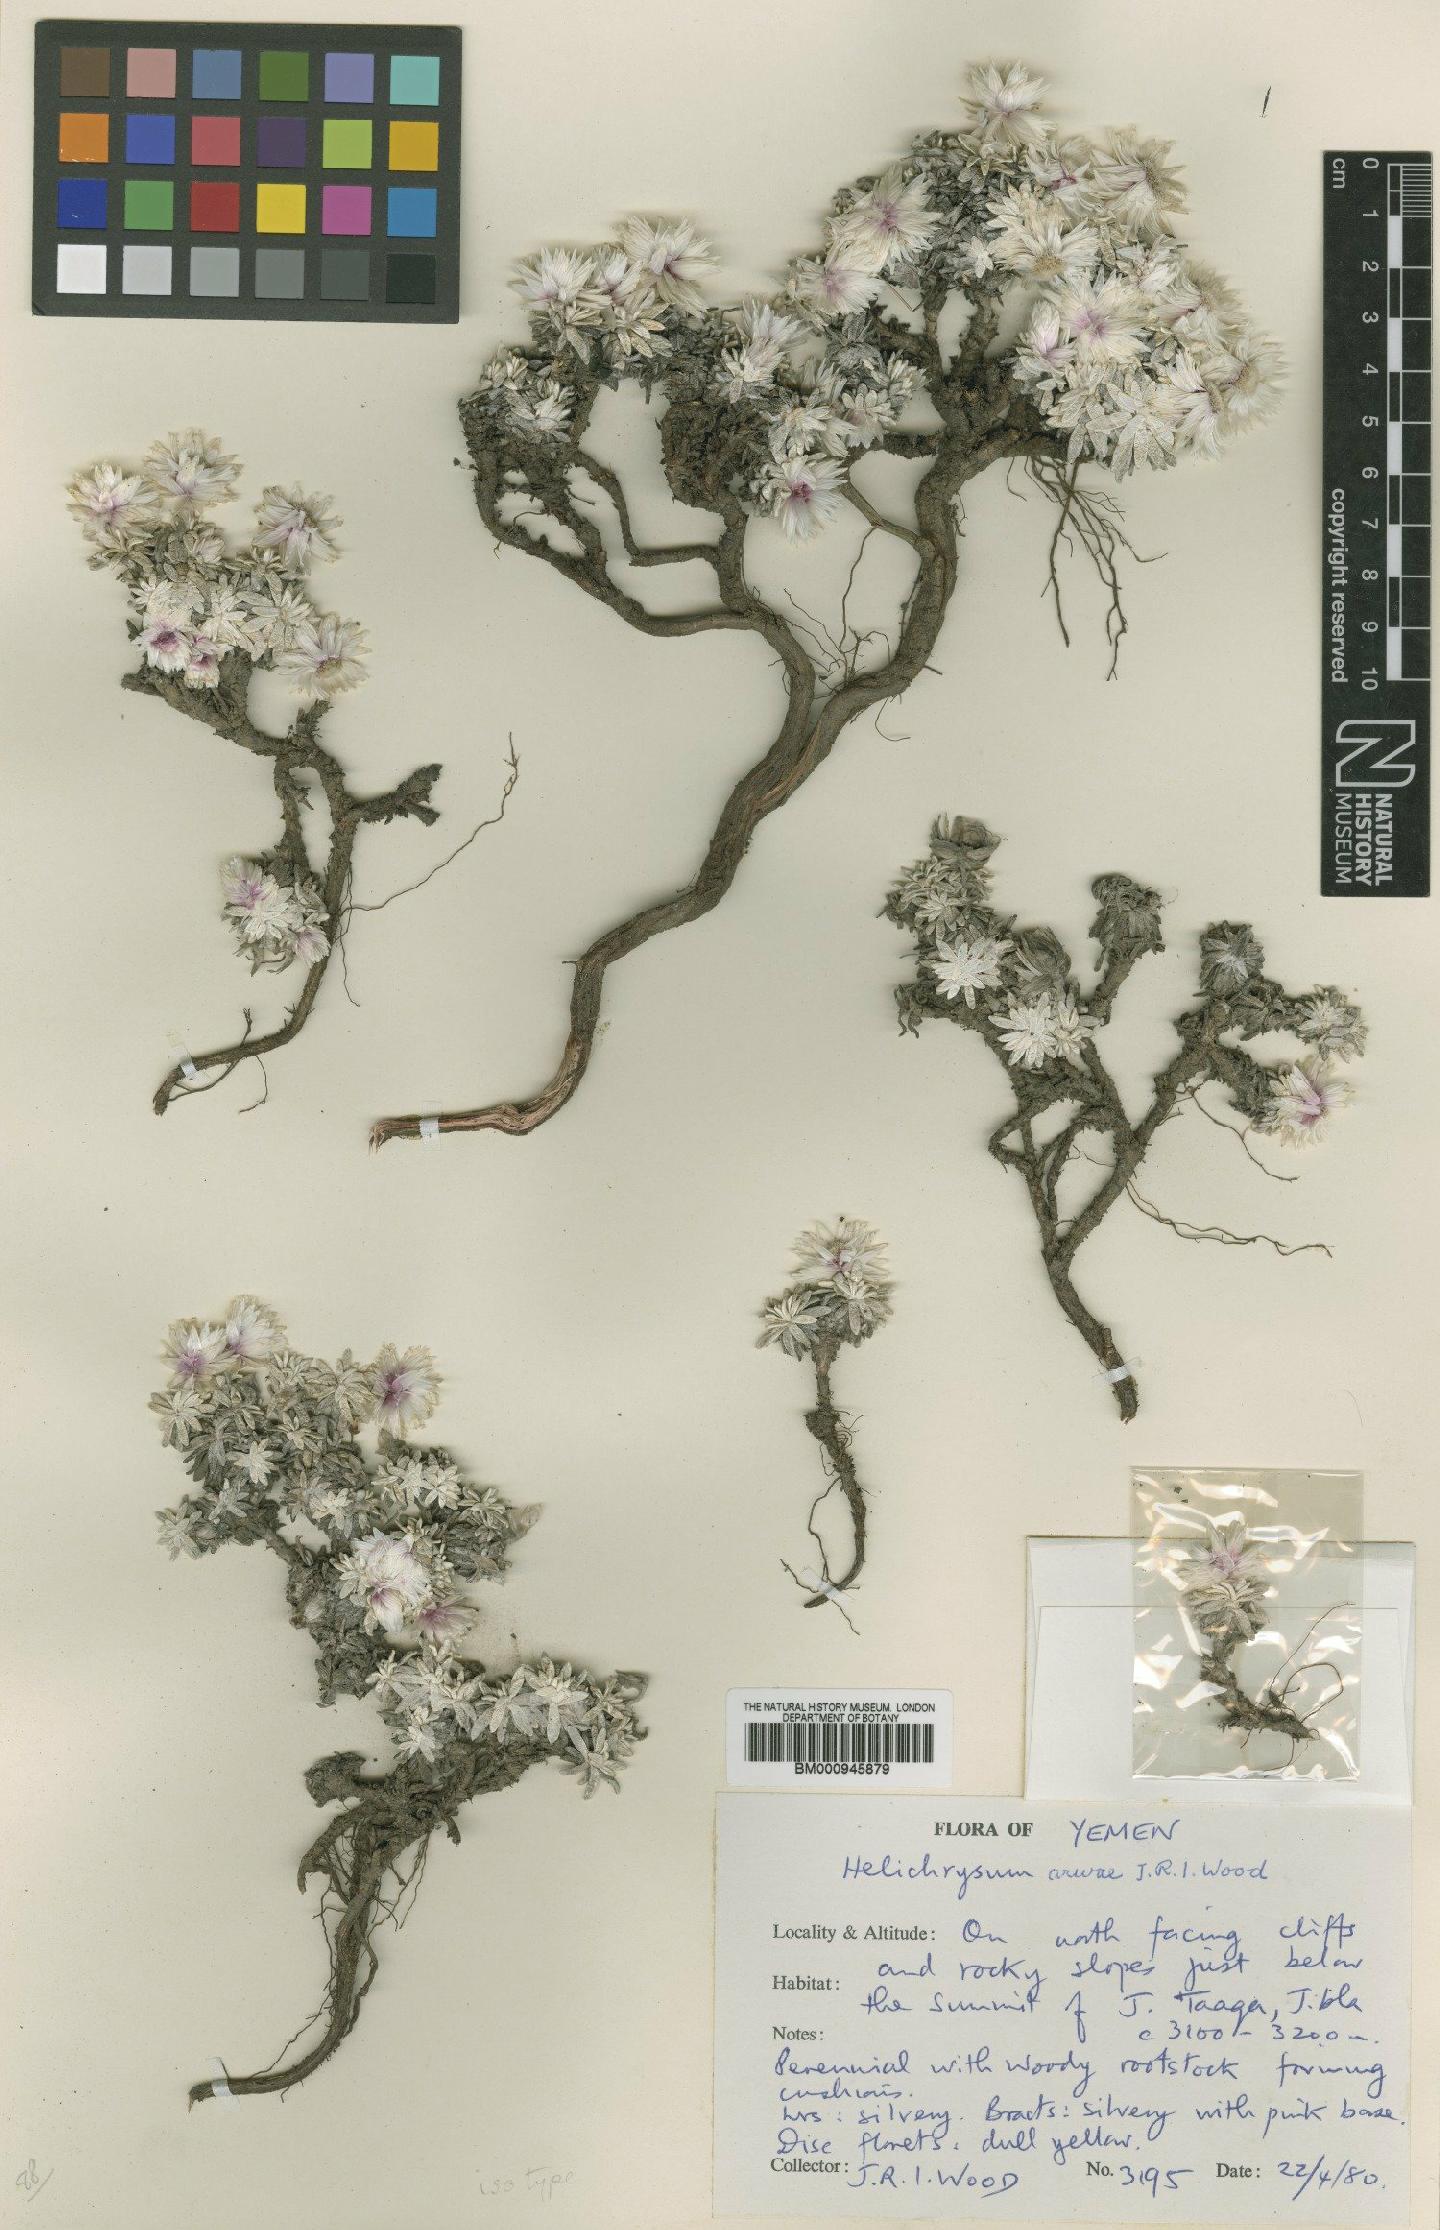 To NHMUK collection (Helichrysum arwae J.R.I.Wood; Isotype; NHMUK:ecatalogue:473240)